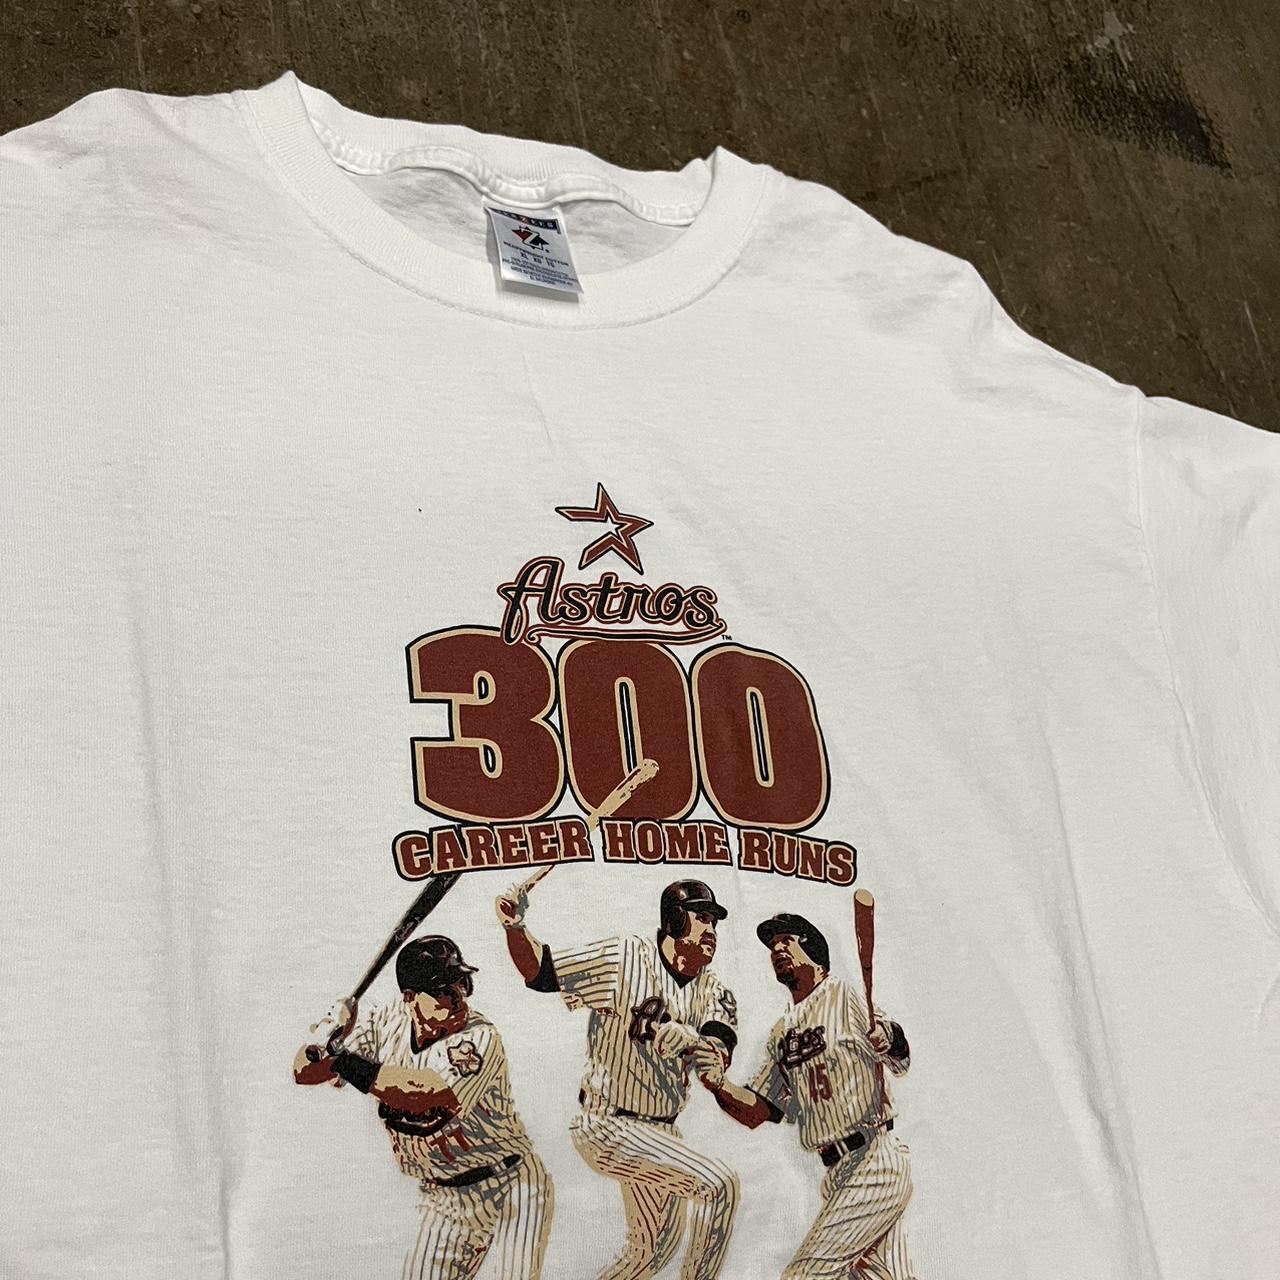 Vintage Astros jersey 1990's Y2K Astros stitched - Depop